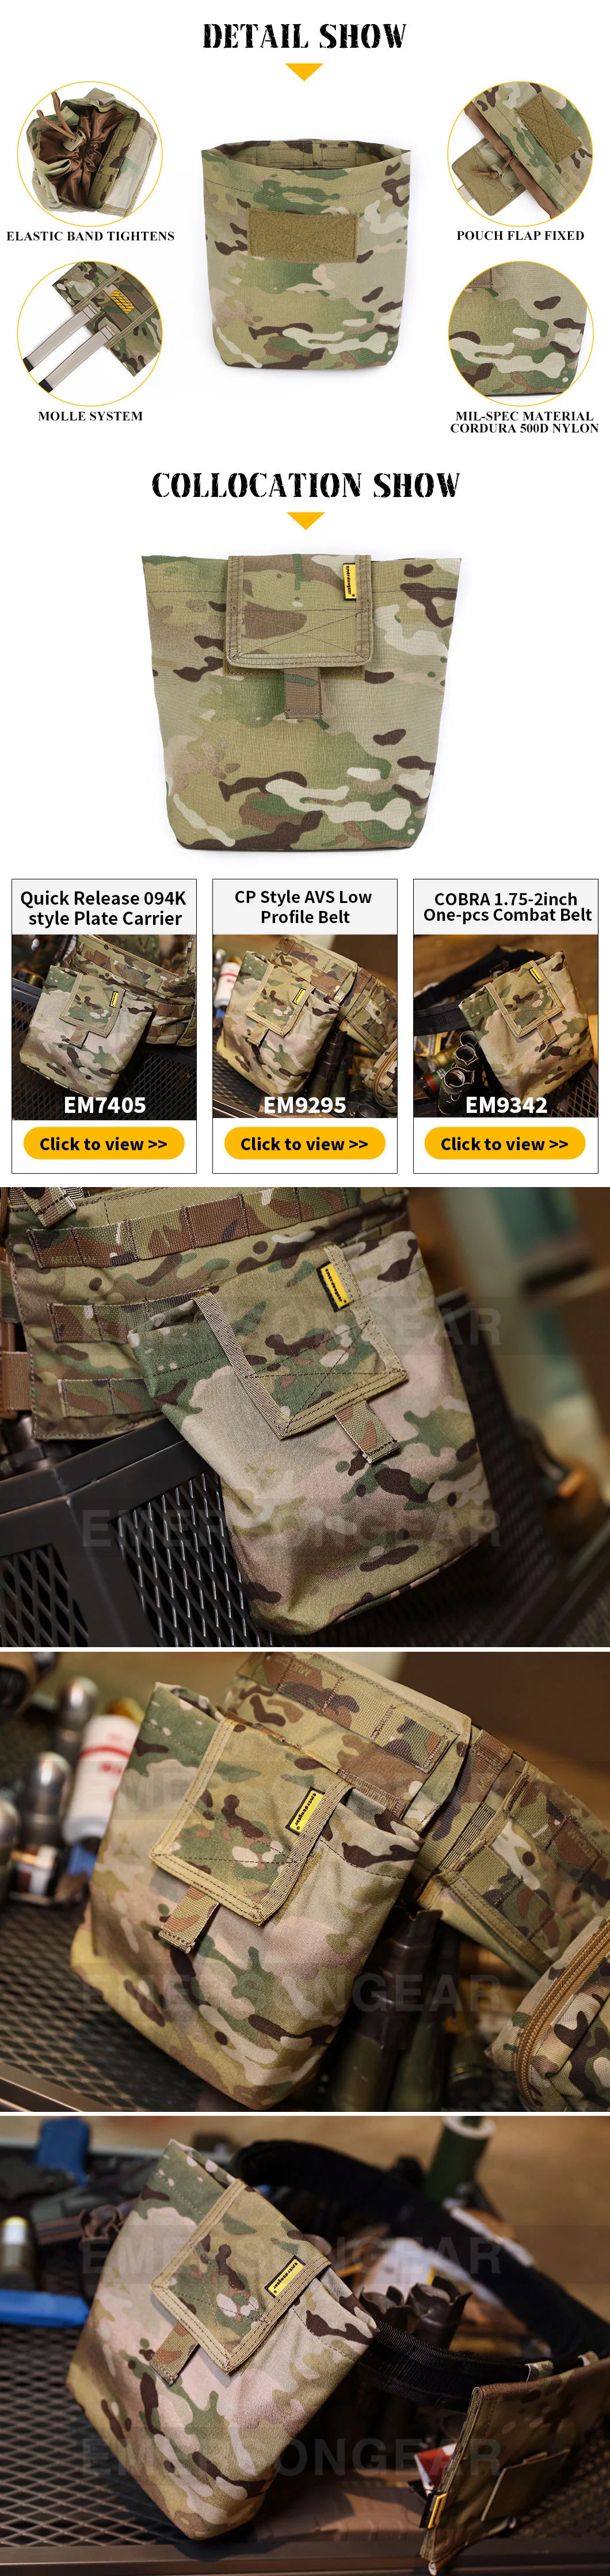 Emersoongear 500d Cordura Nylon Military Style Tactical Folding Dump Pouch